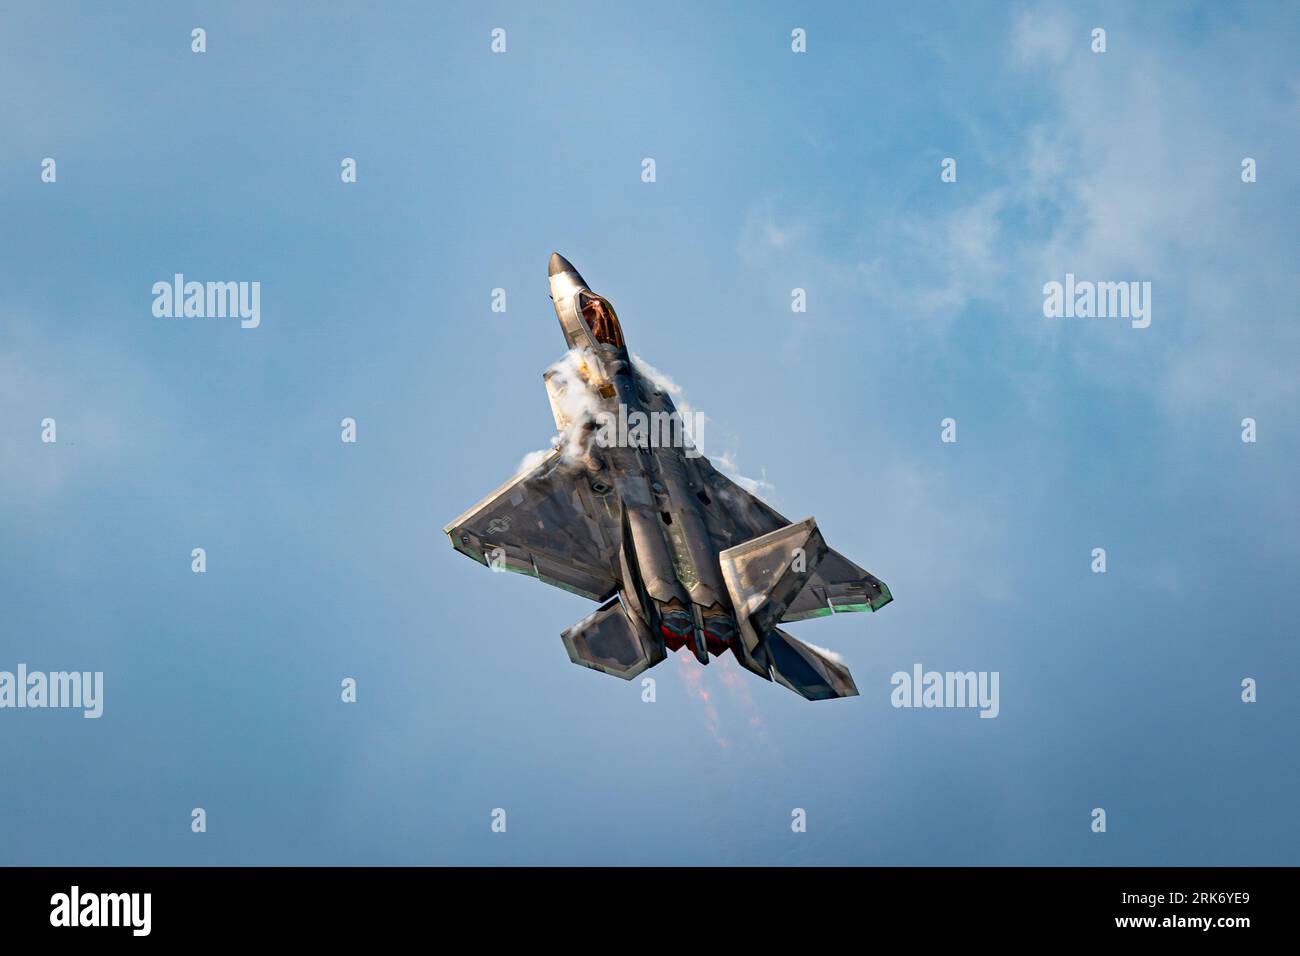 A sleek military jet fighter aircraft soaring through a bright blue sky, emitting white smoke Stock Photo